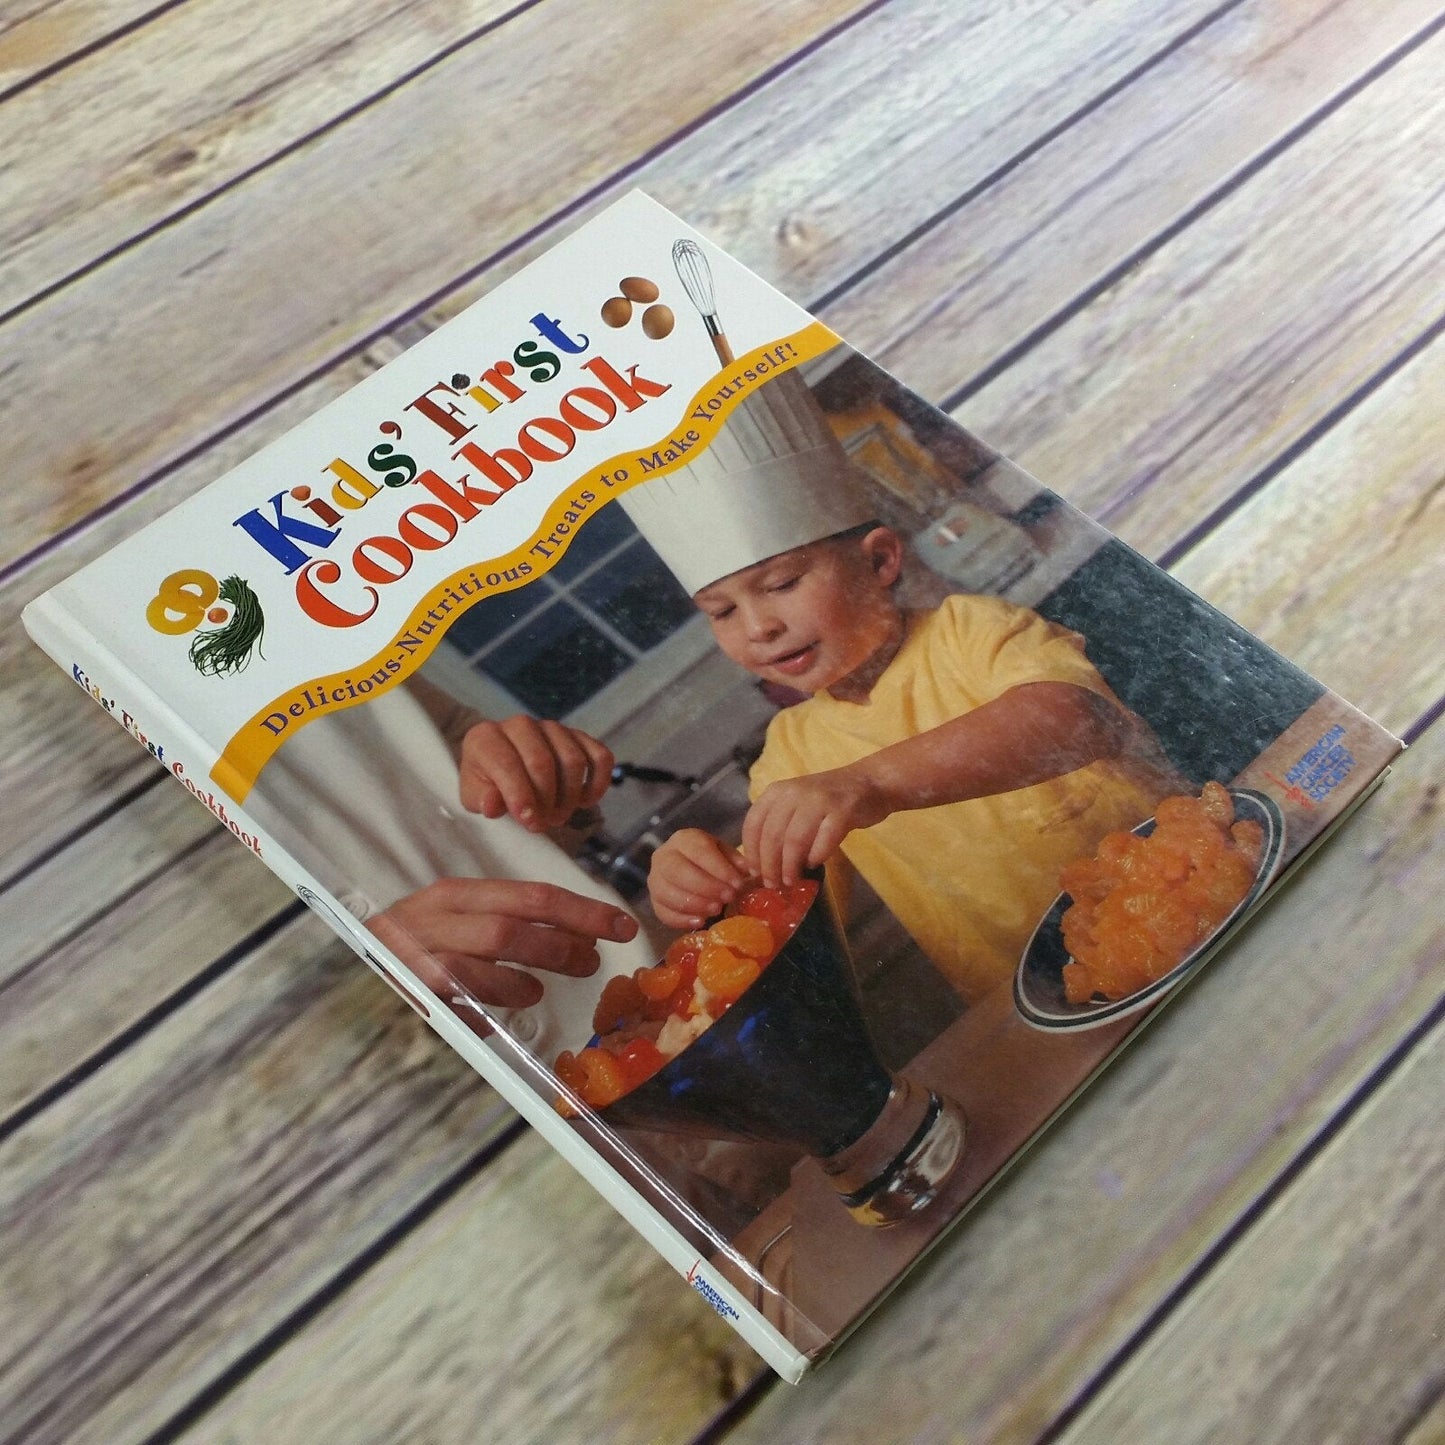 Vintage Kids Cookbook Kids First Cookbook American Cancer Society Childrens Recipes Hardcover 2000